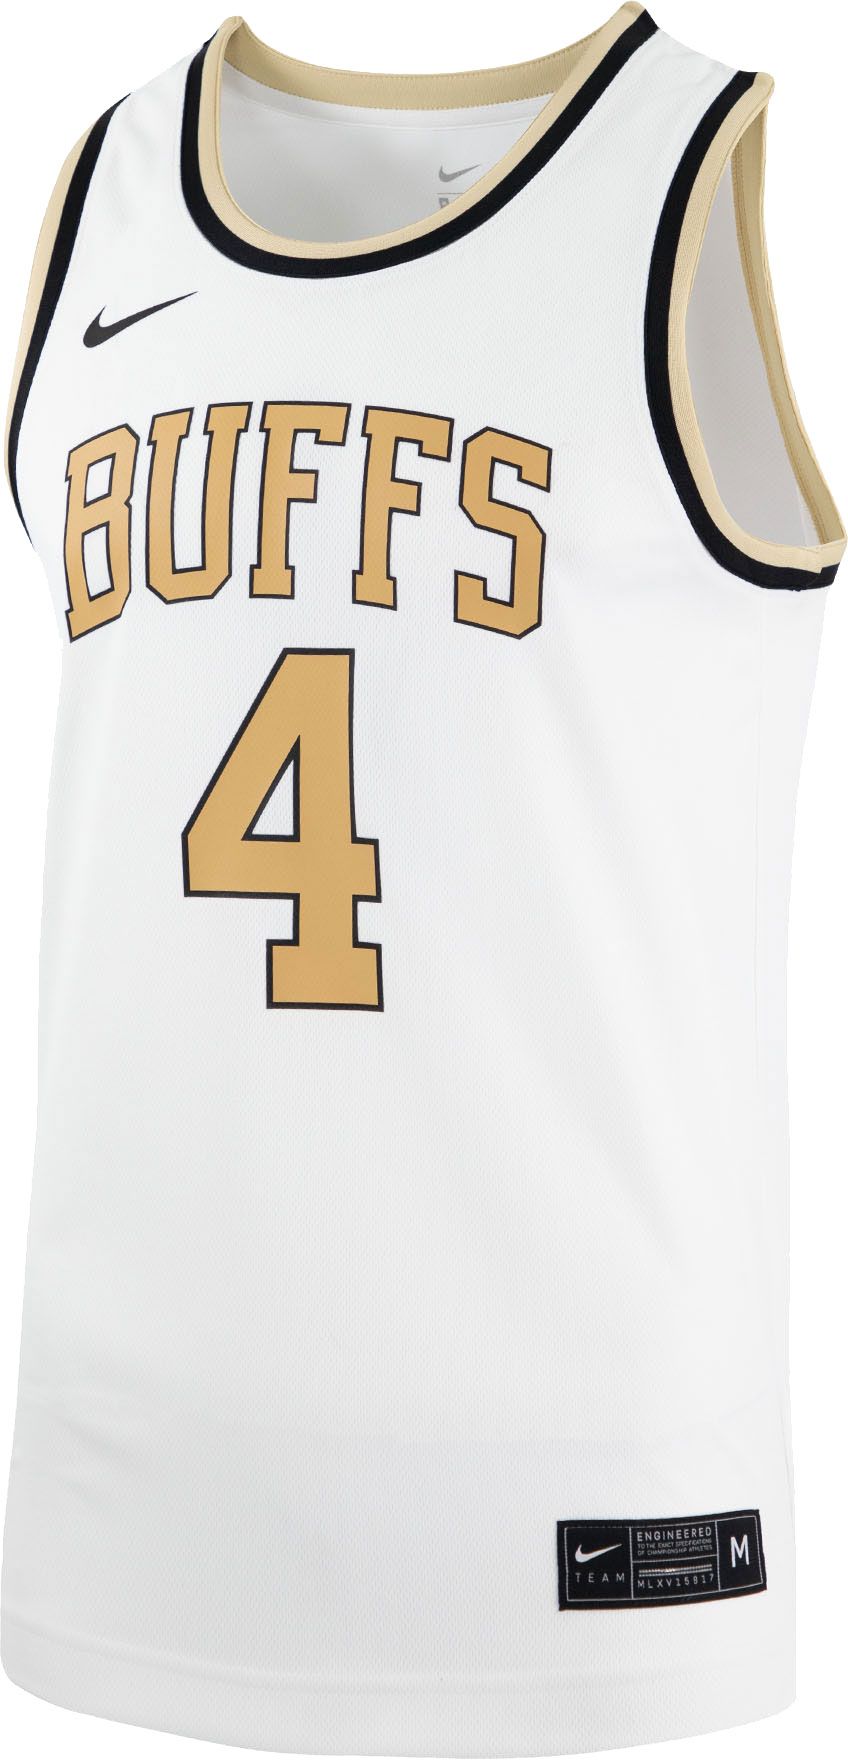 colorado buffaloes basketball jersey